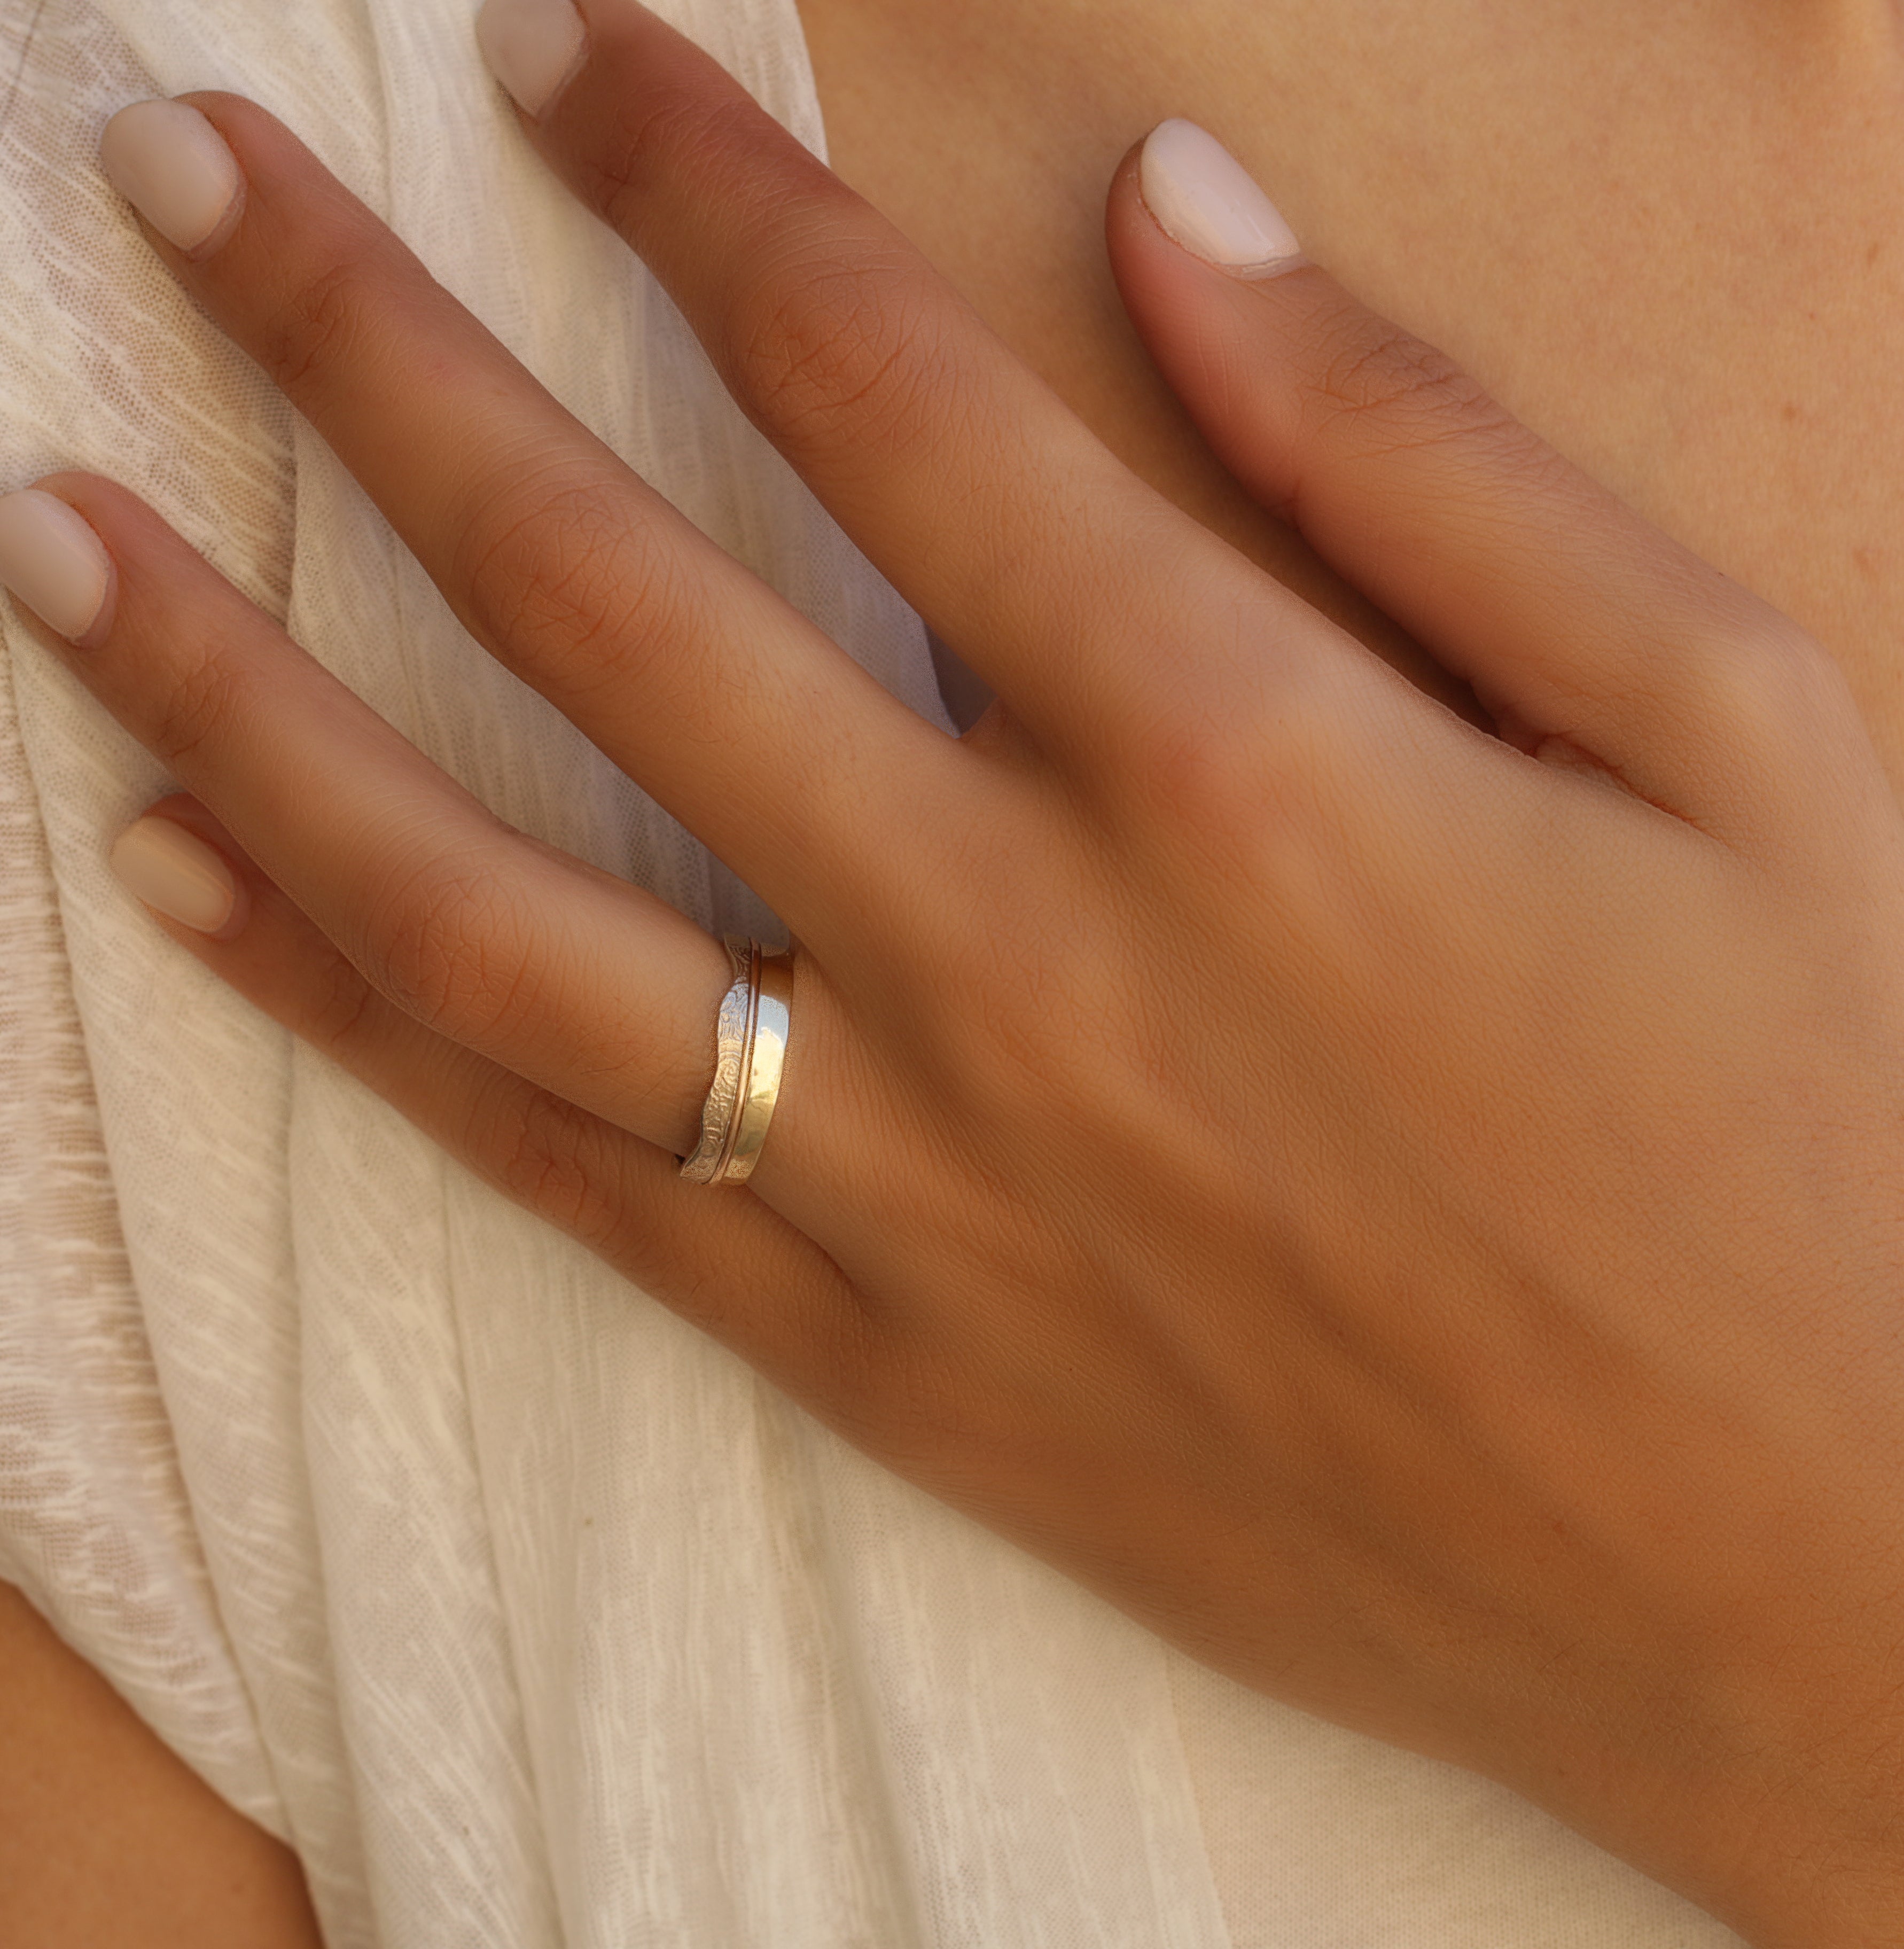 The Prettiest Wedding Rings for Women We've Ever Seen